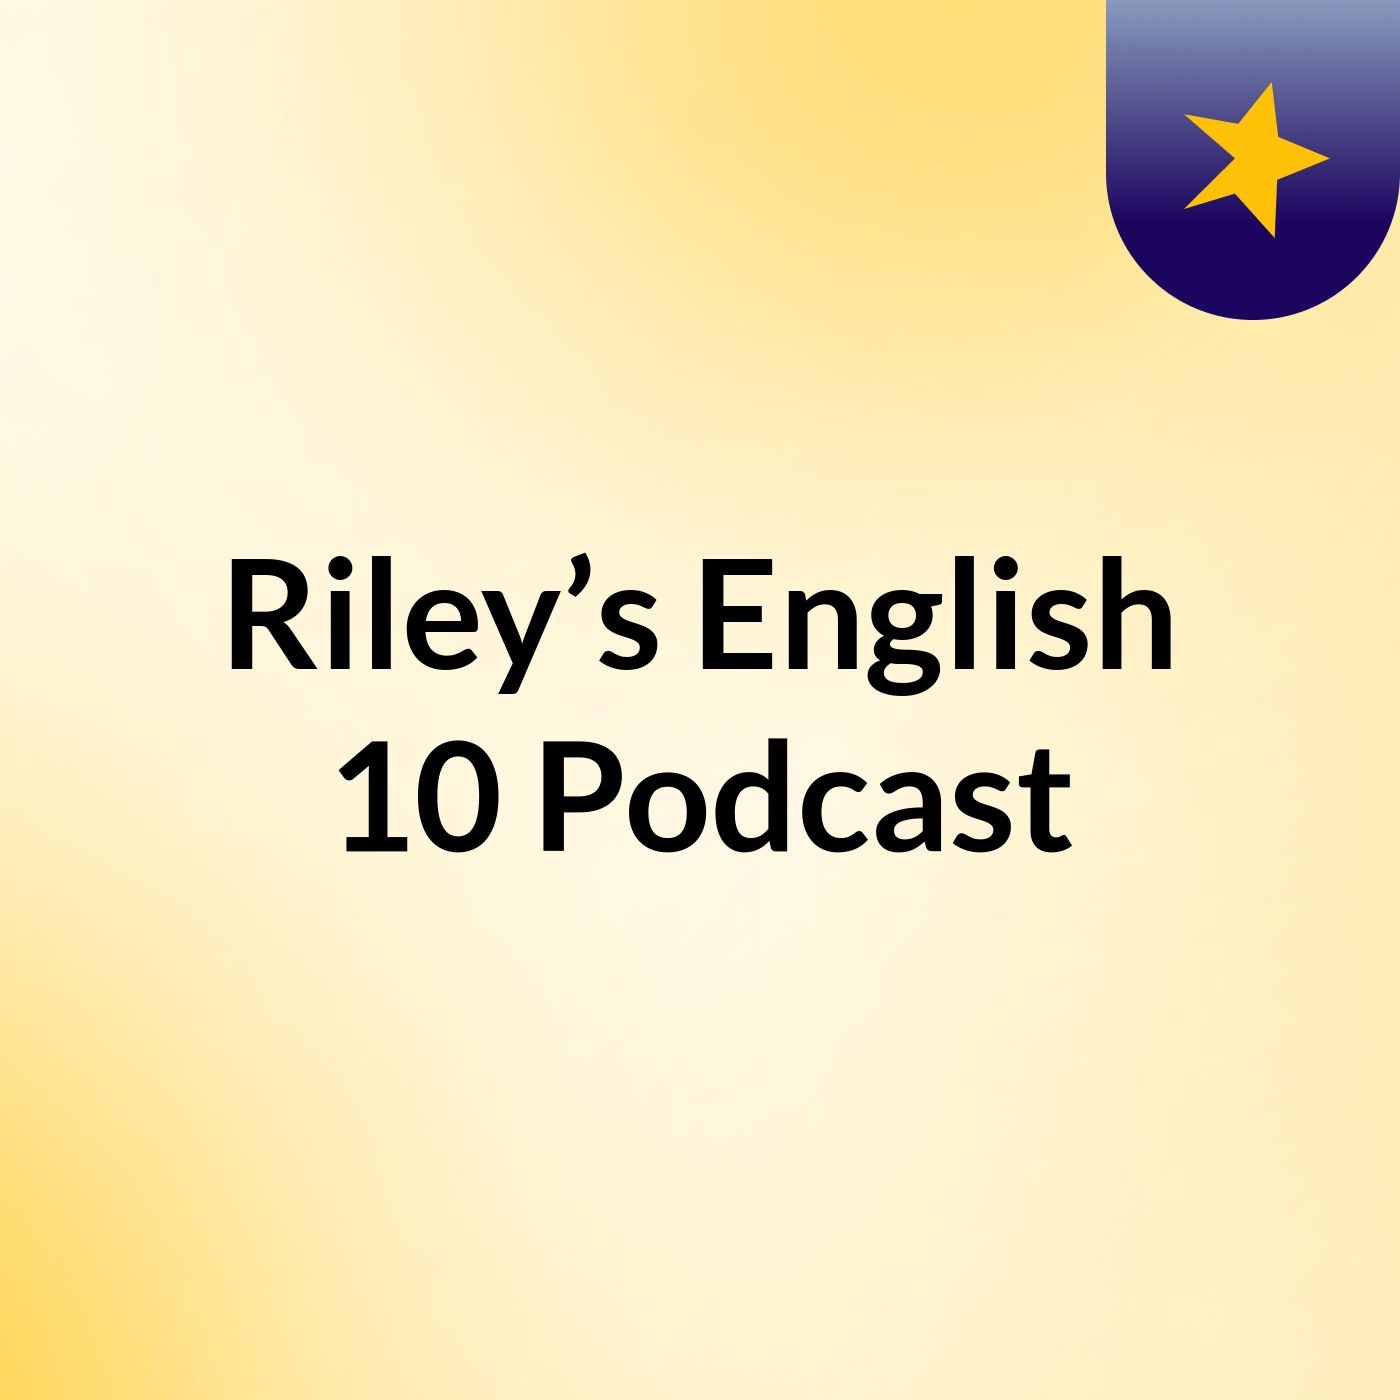 Riley’s English 10 Podcast